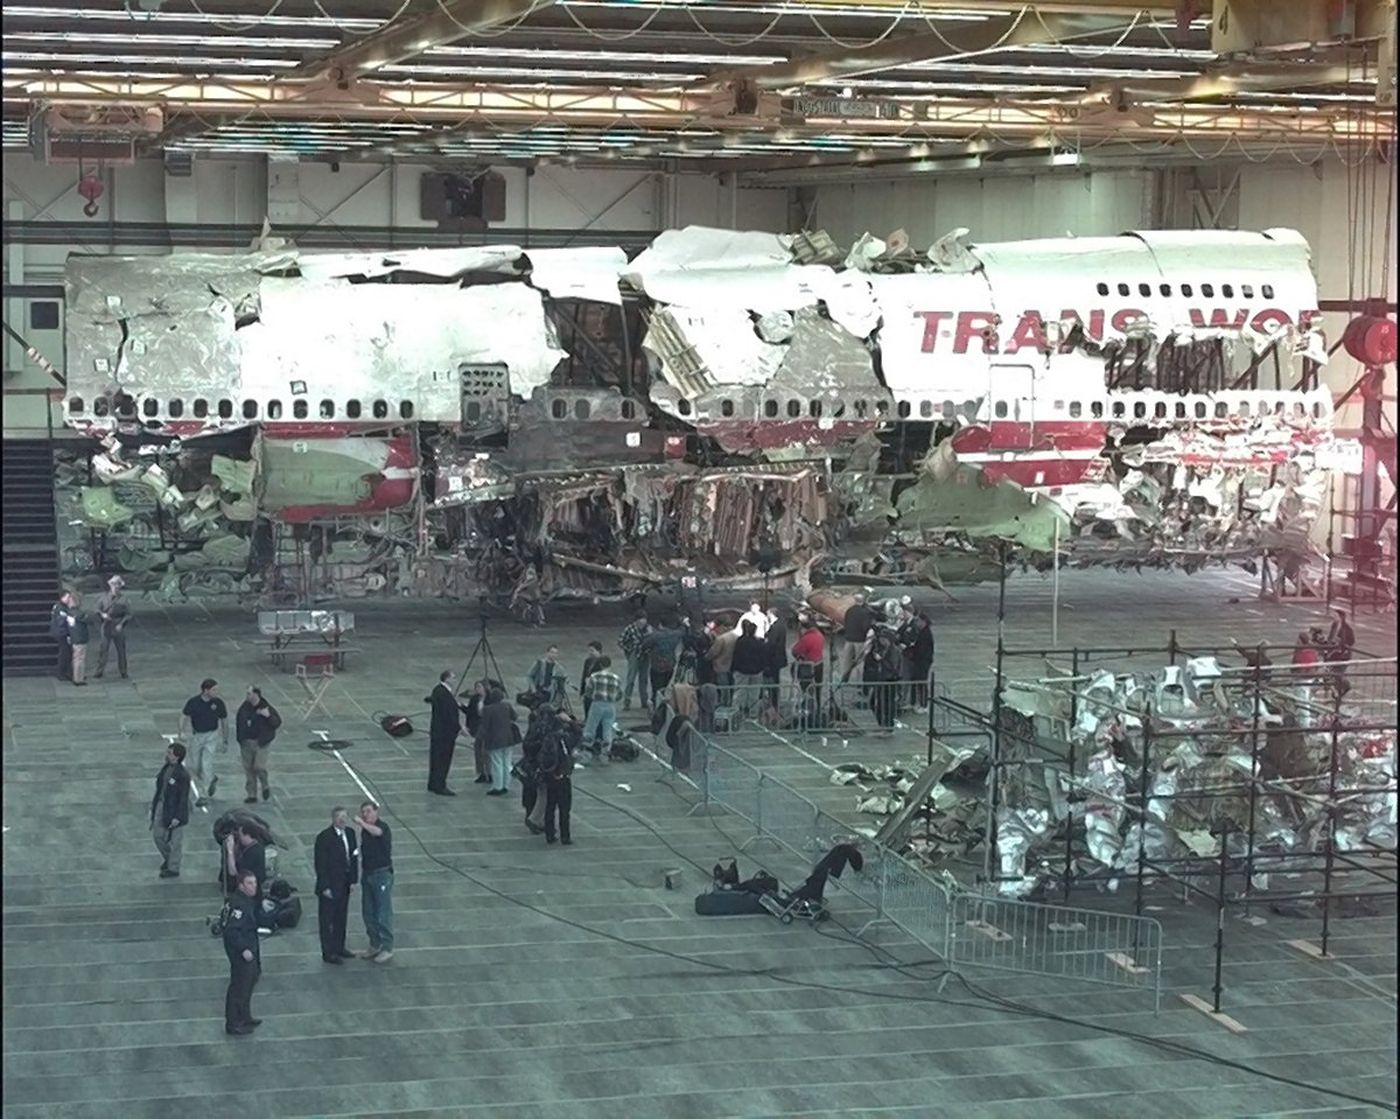 It exploded without warning': The crash of TWA Flight 800 25 years ago 